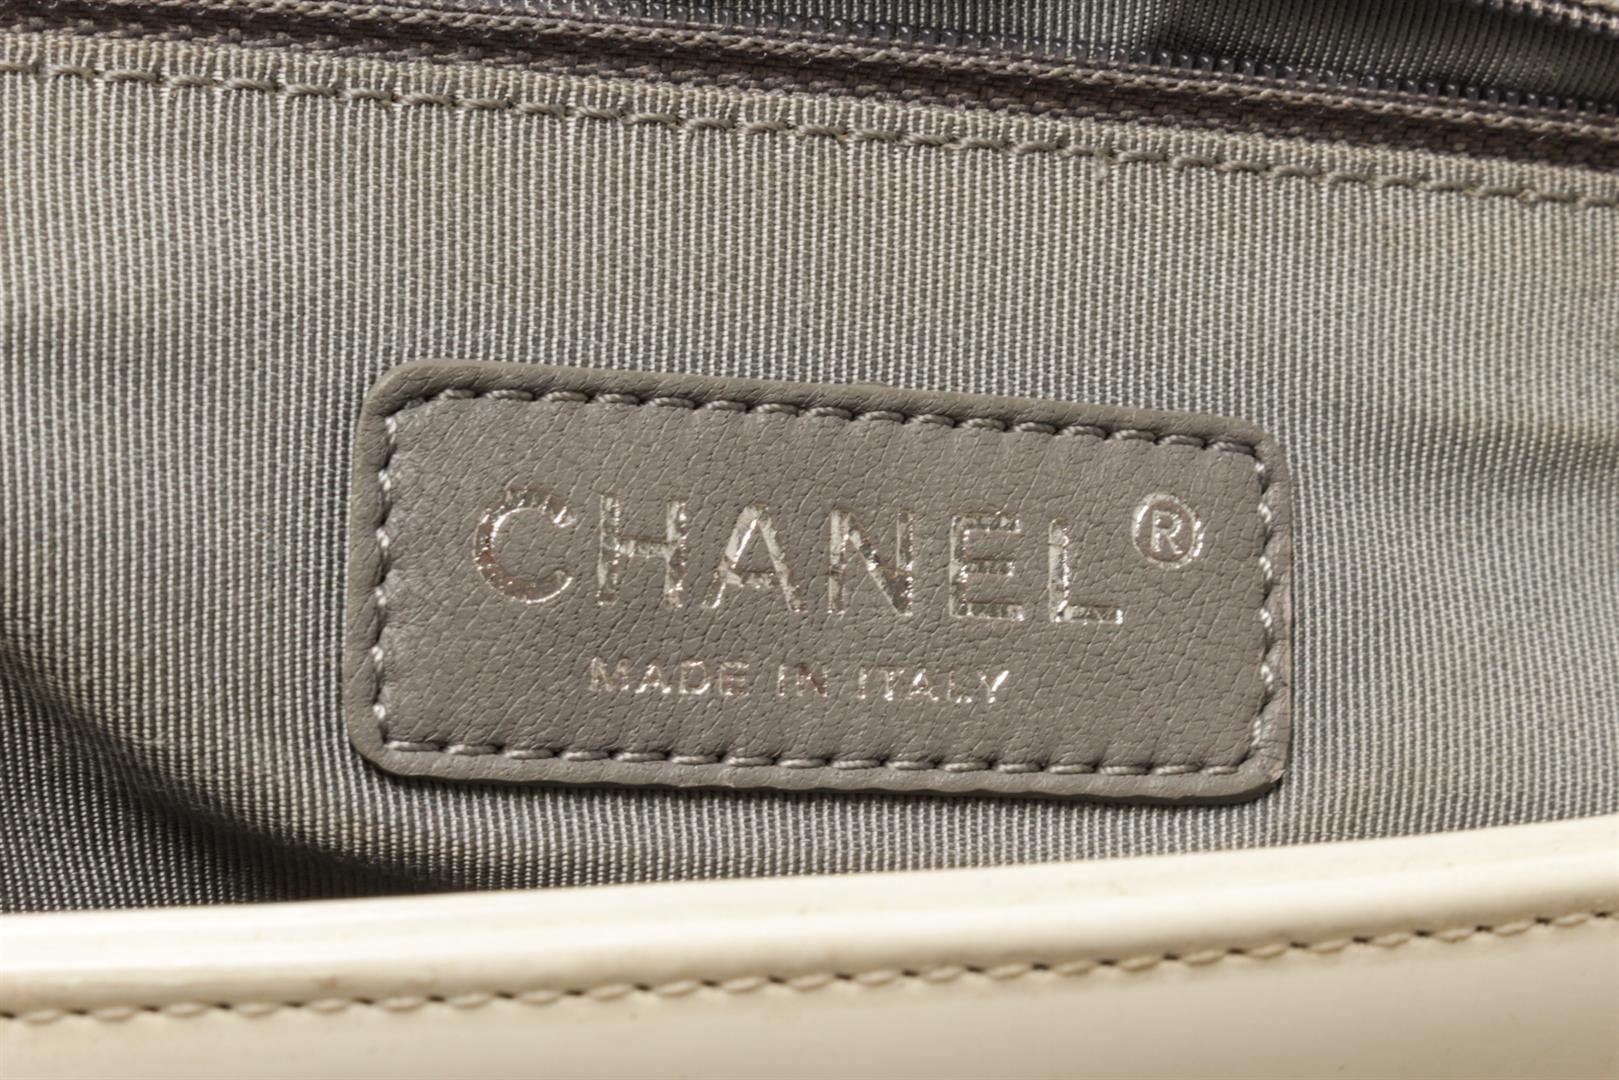 Chanel White Patent Leather Large Boy Shoulder Bag